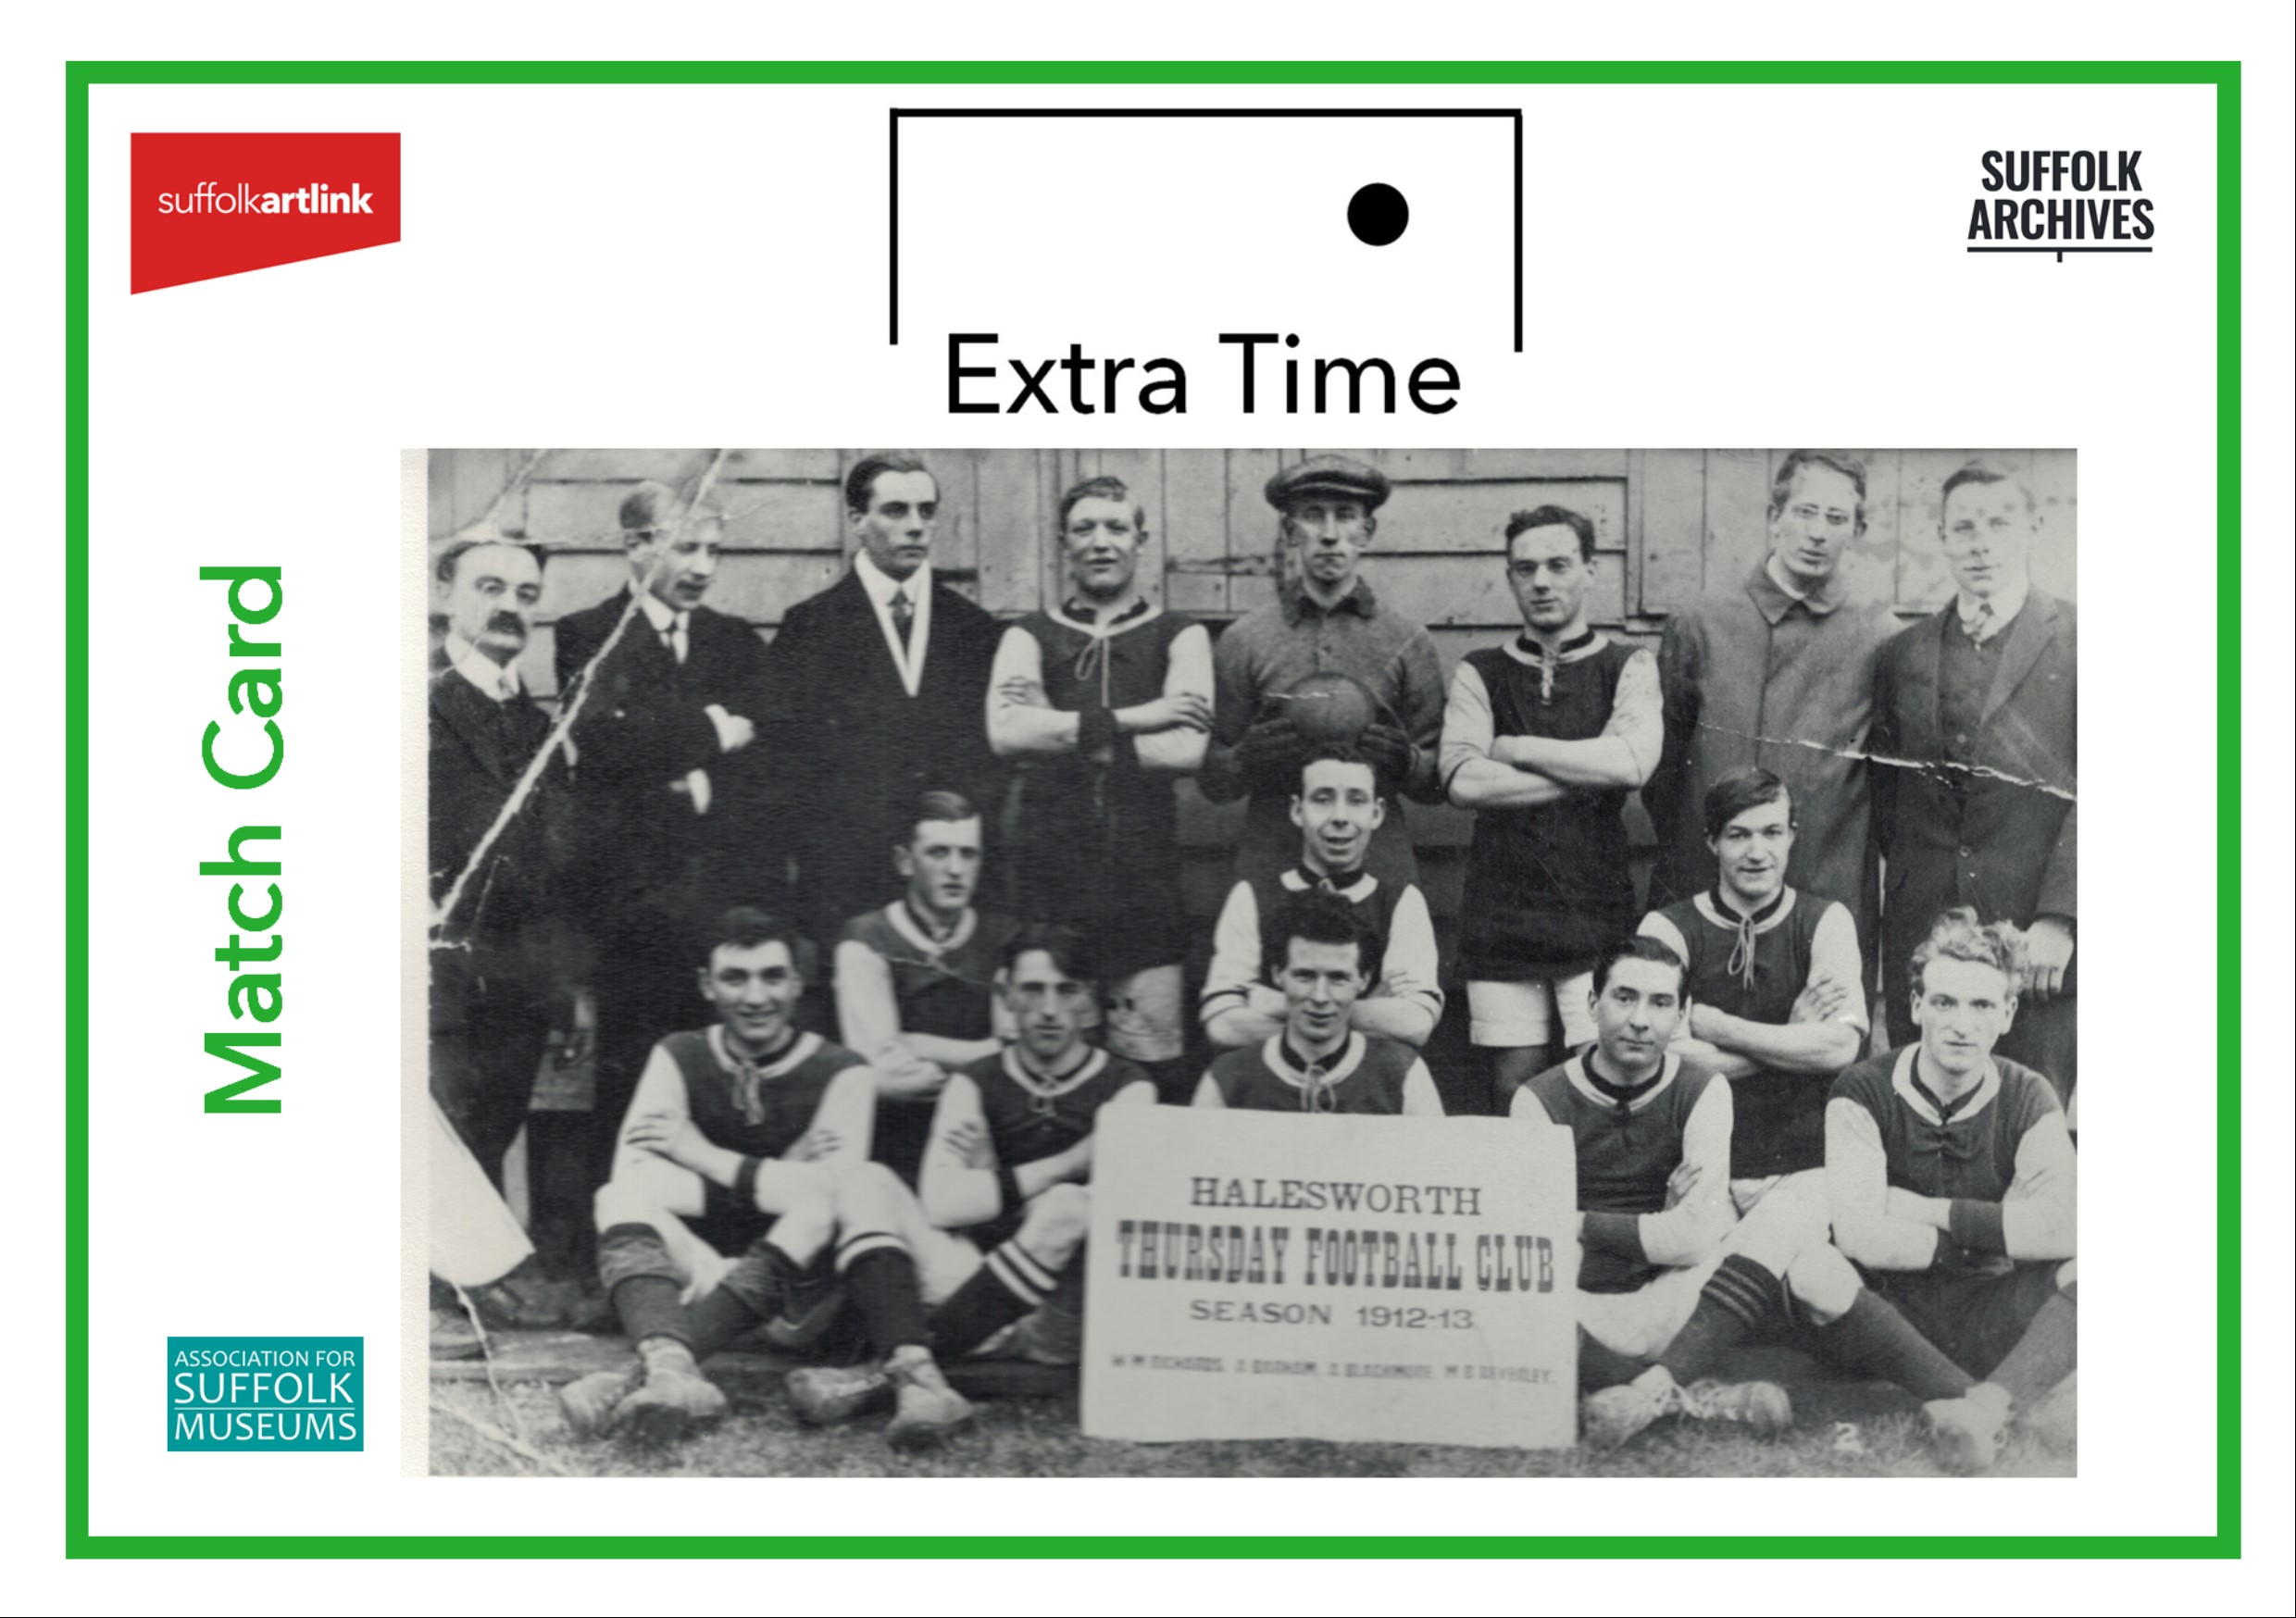 Halesworth Thursday Football Club season 1912 - 13